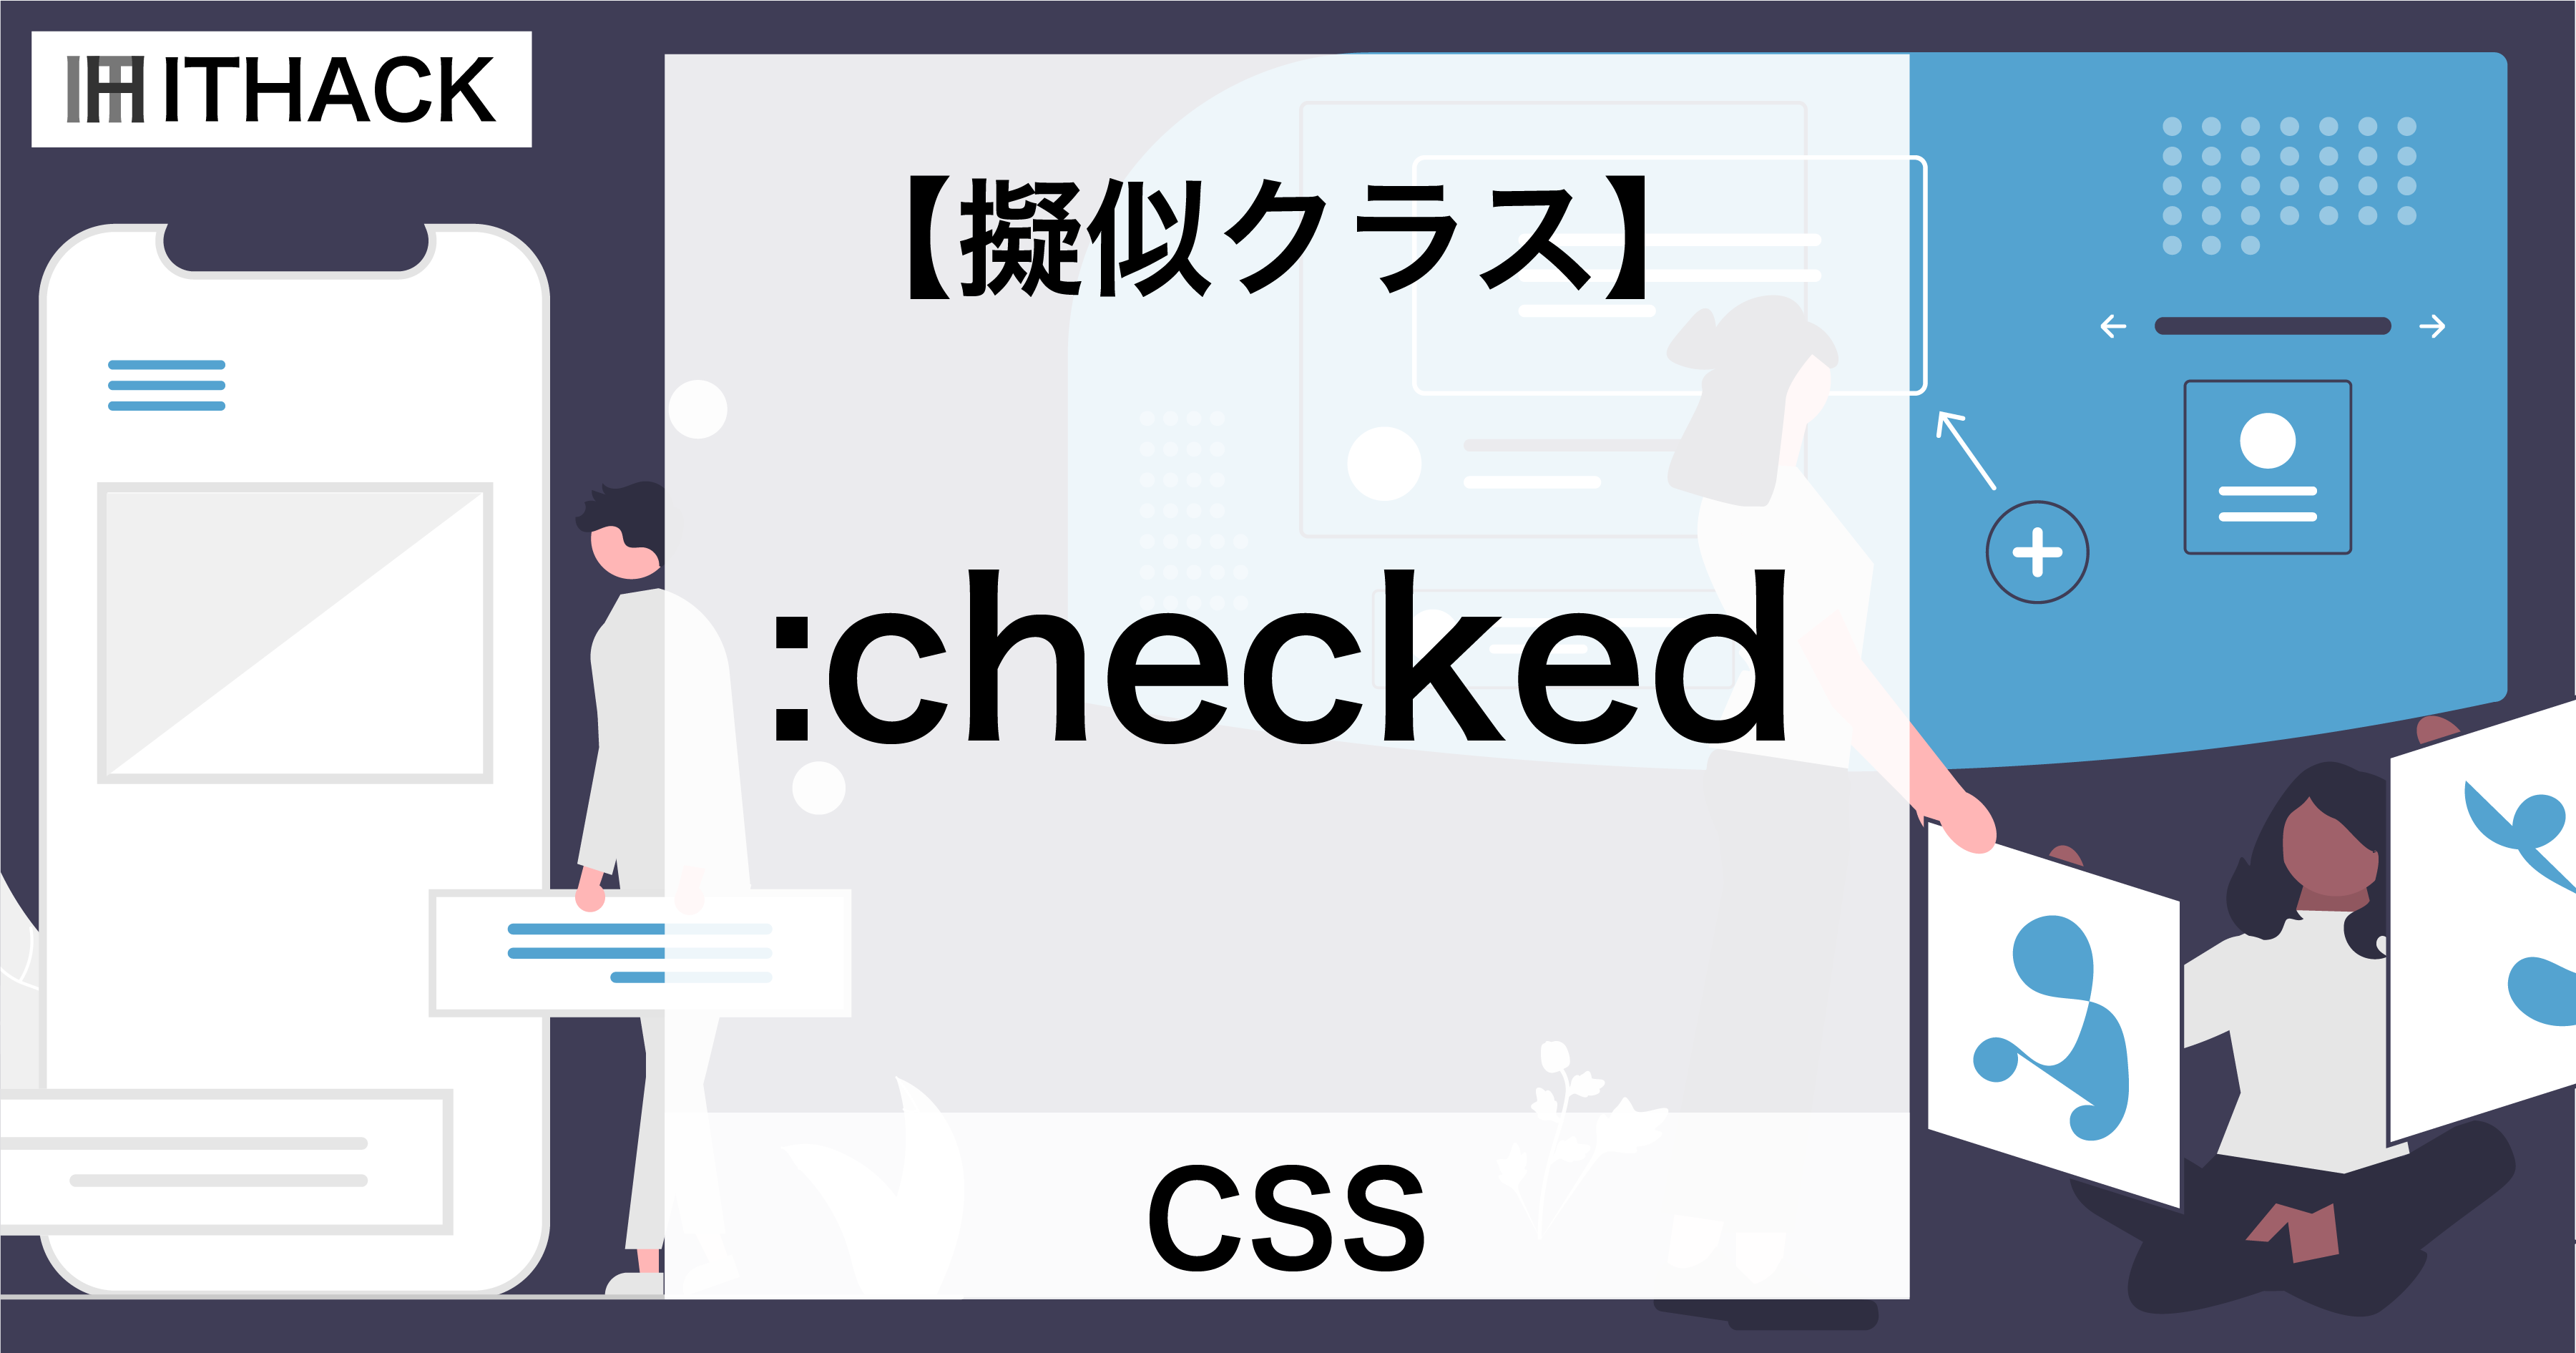 【CSS】:checked（擬似クラス） - チェック状態